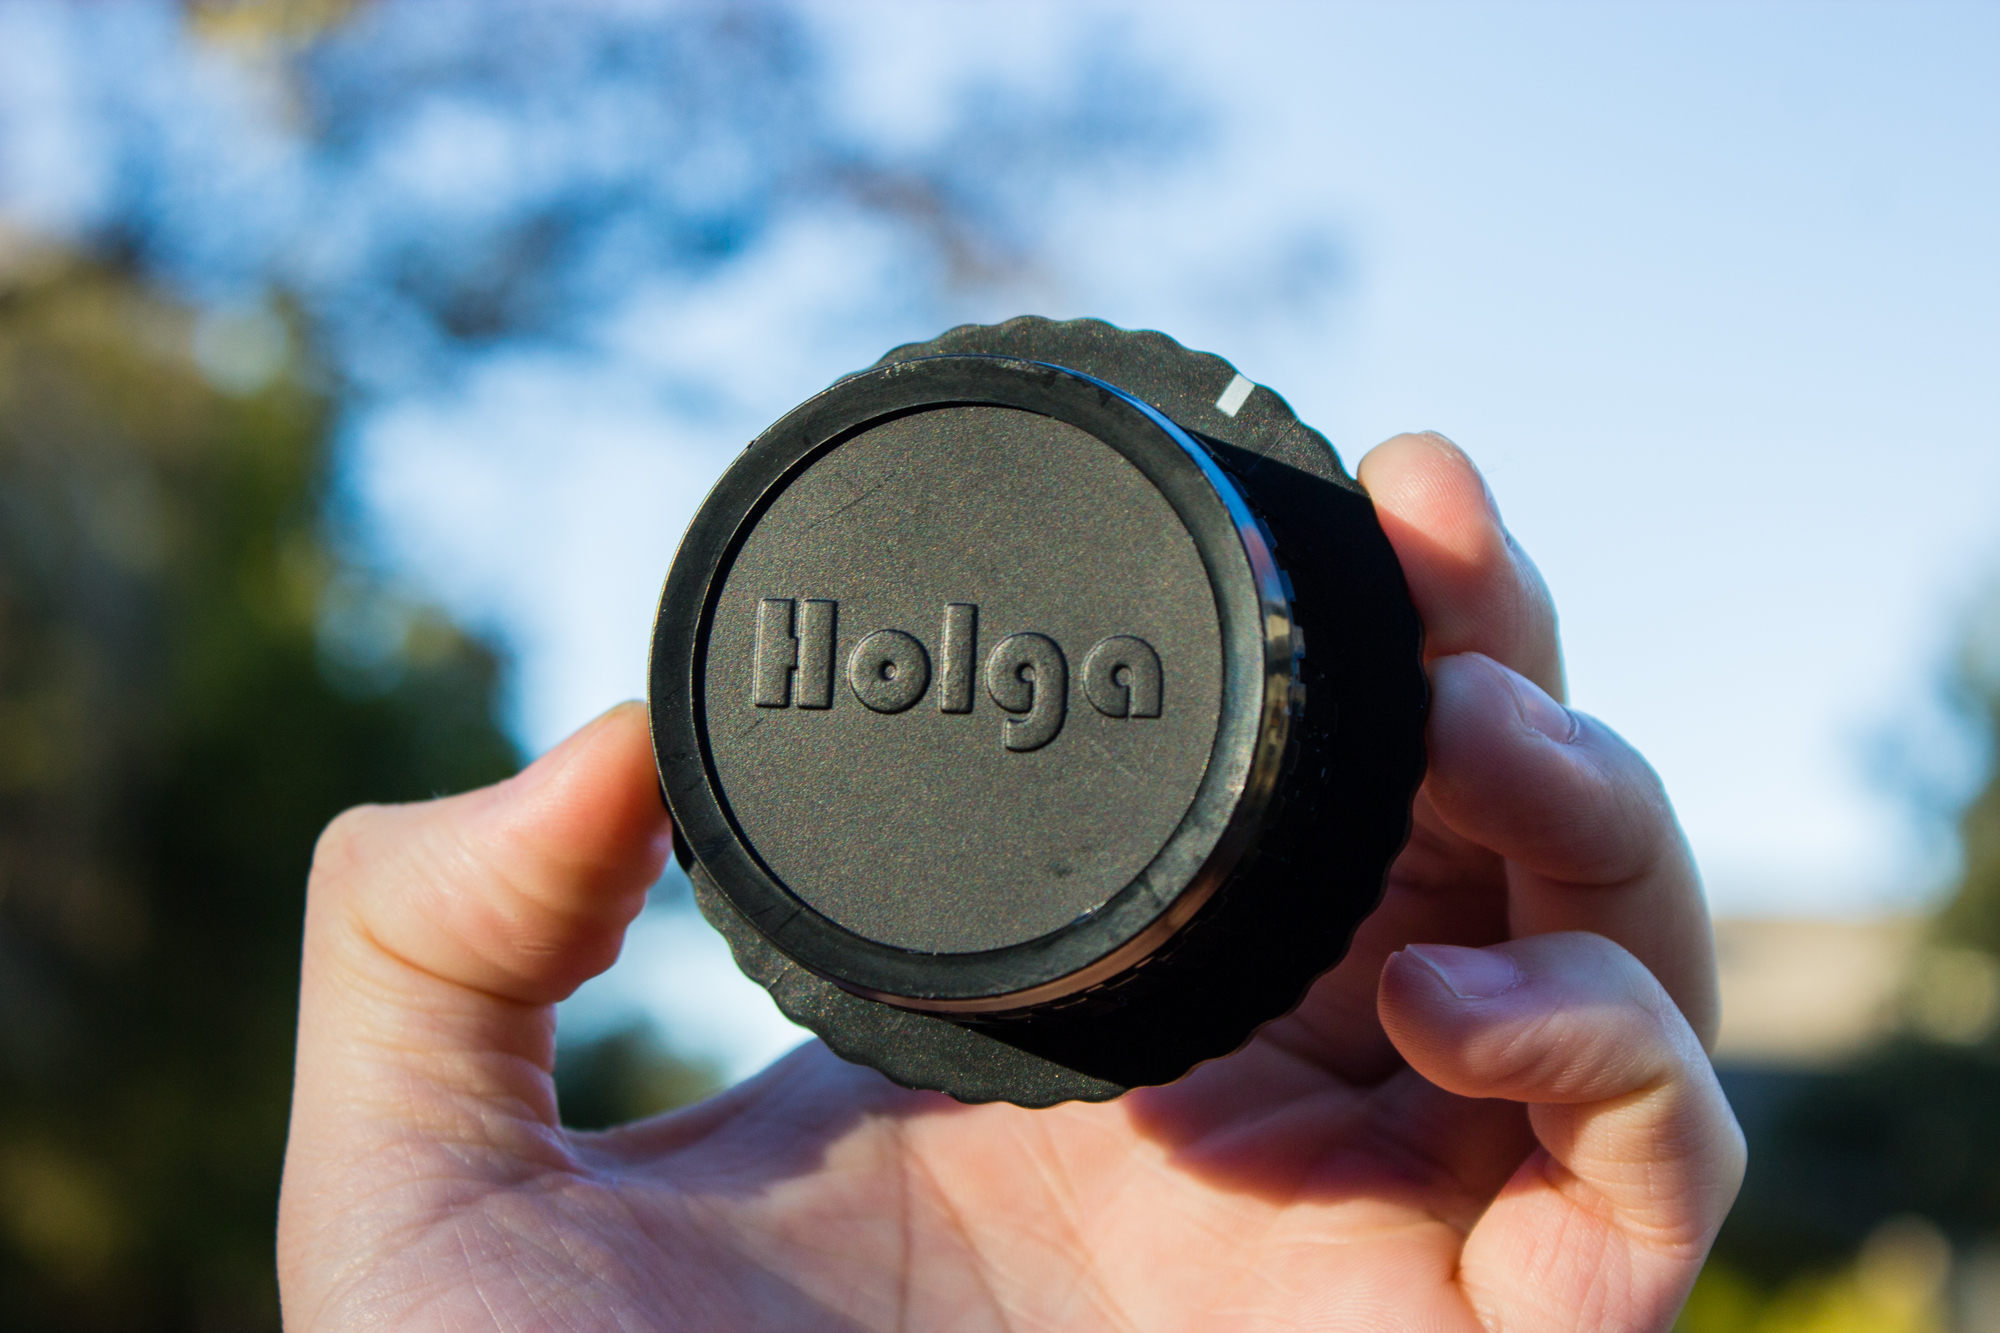 Temerity verlies uzelf spion Review: Digital Holga Lens (Canon DSLRs) - The Phoblographer